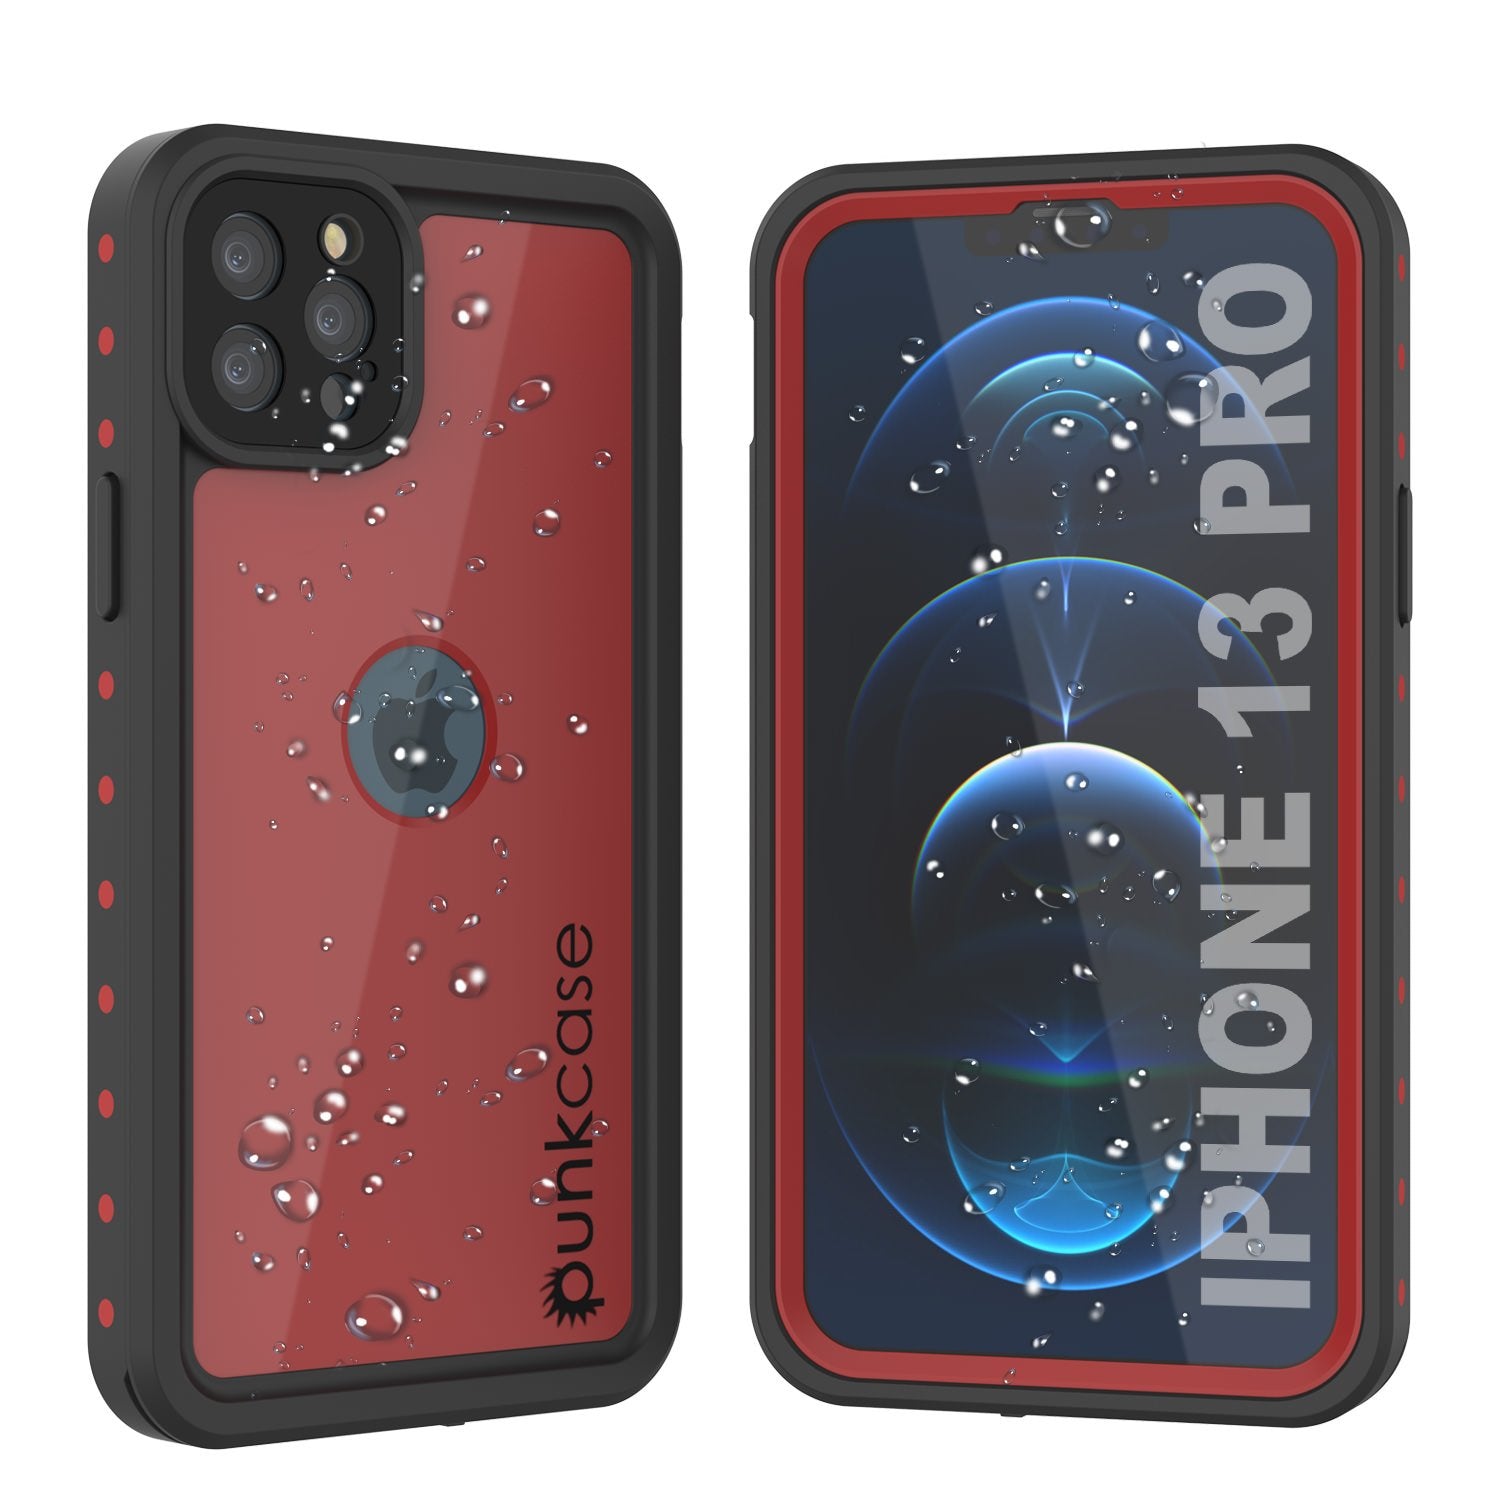 iPhone 13 Pro Waterproof IP68 Case, Punkcase [Red] [StudStar Series] [Slim Fit] (Color in image: Red)